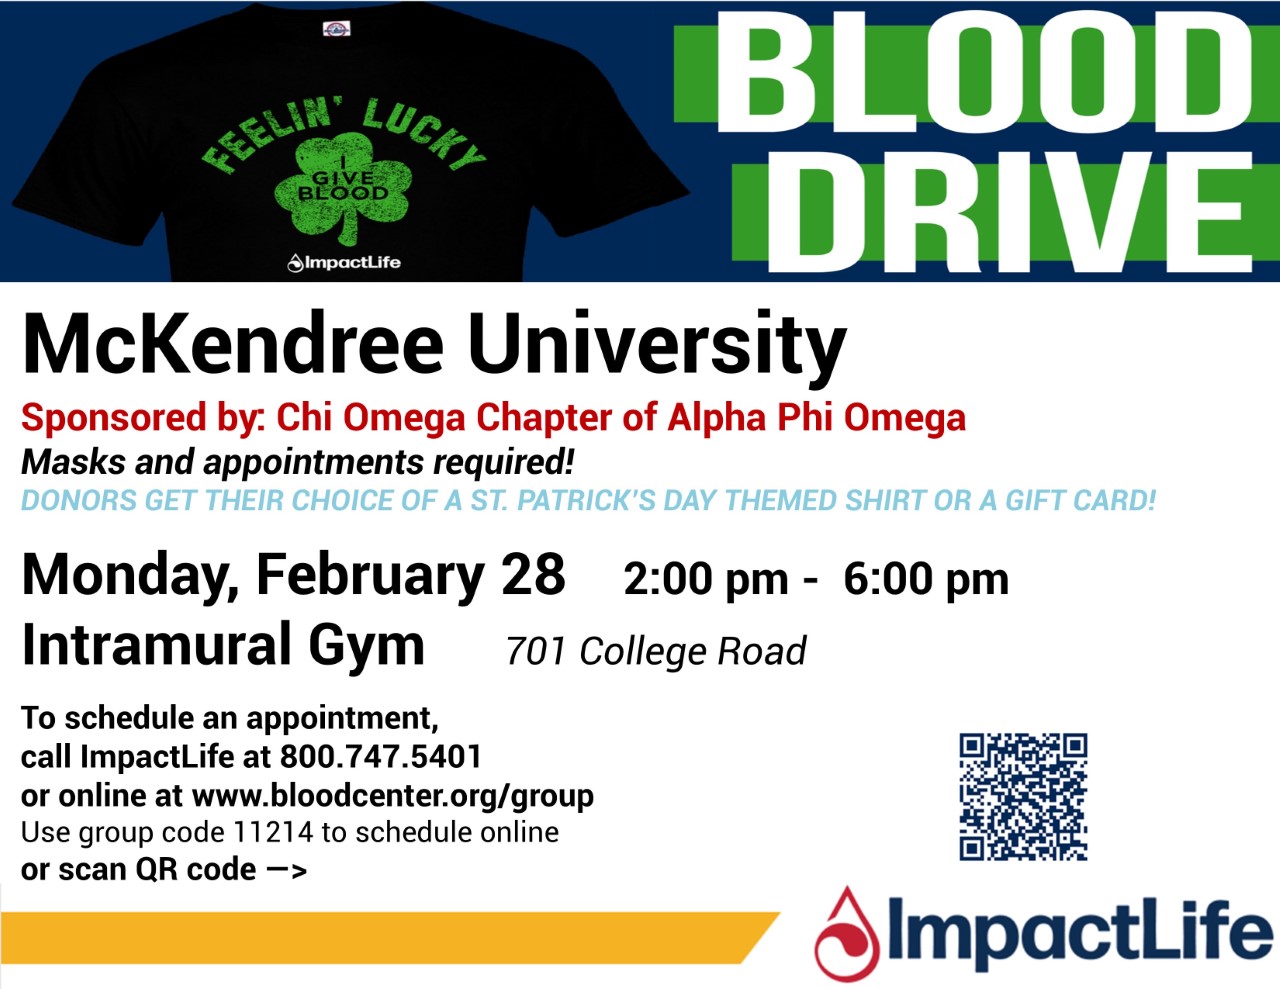 Blood Drive on Monday, February 28!